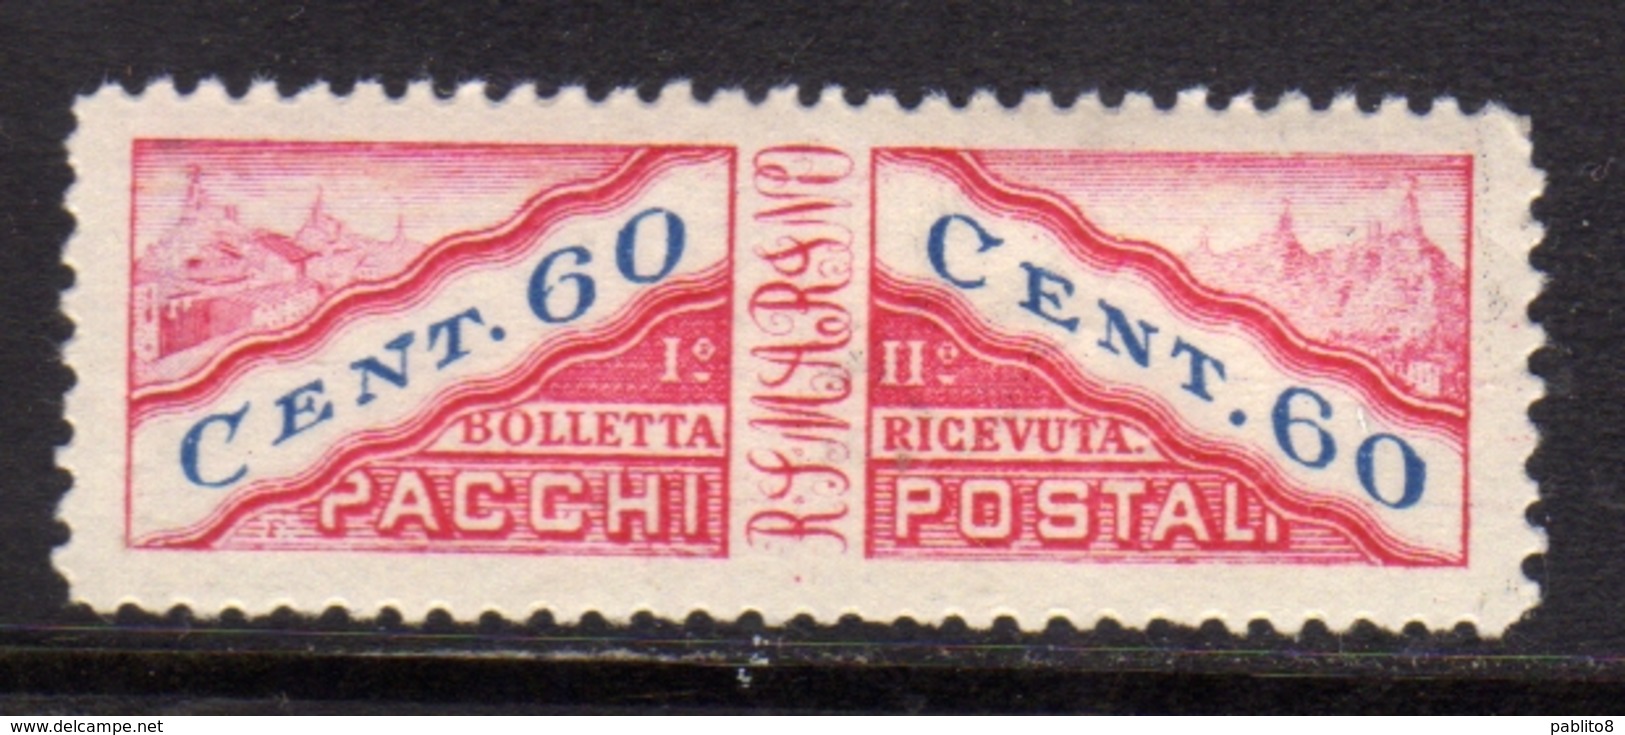 SAN MARINO 1928 PACCHI POSTALI PARCEL POST CENT. 60c MNH - Paketmarken